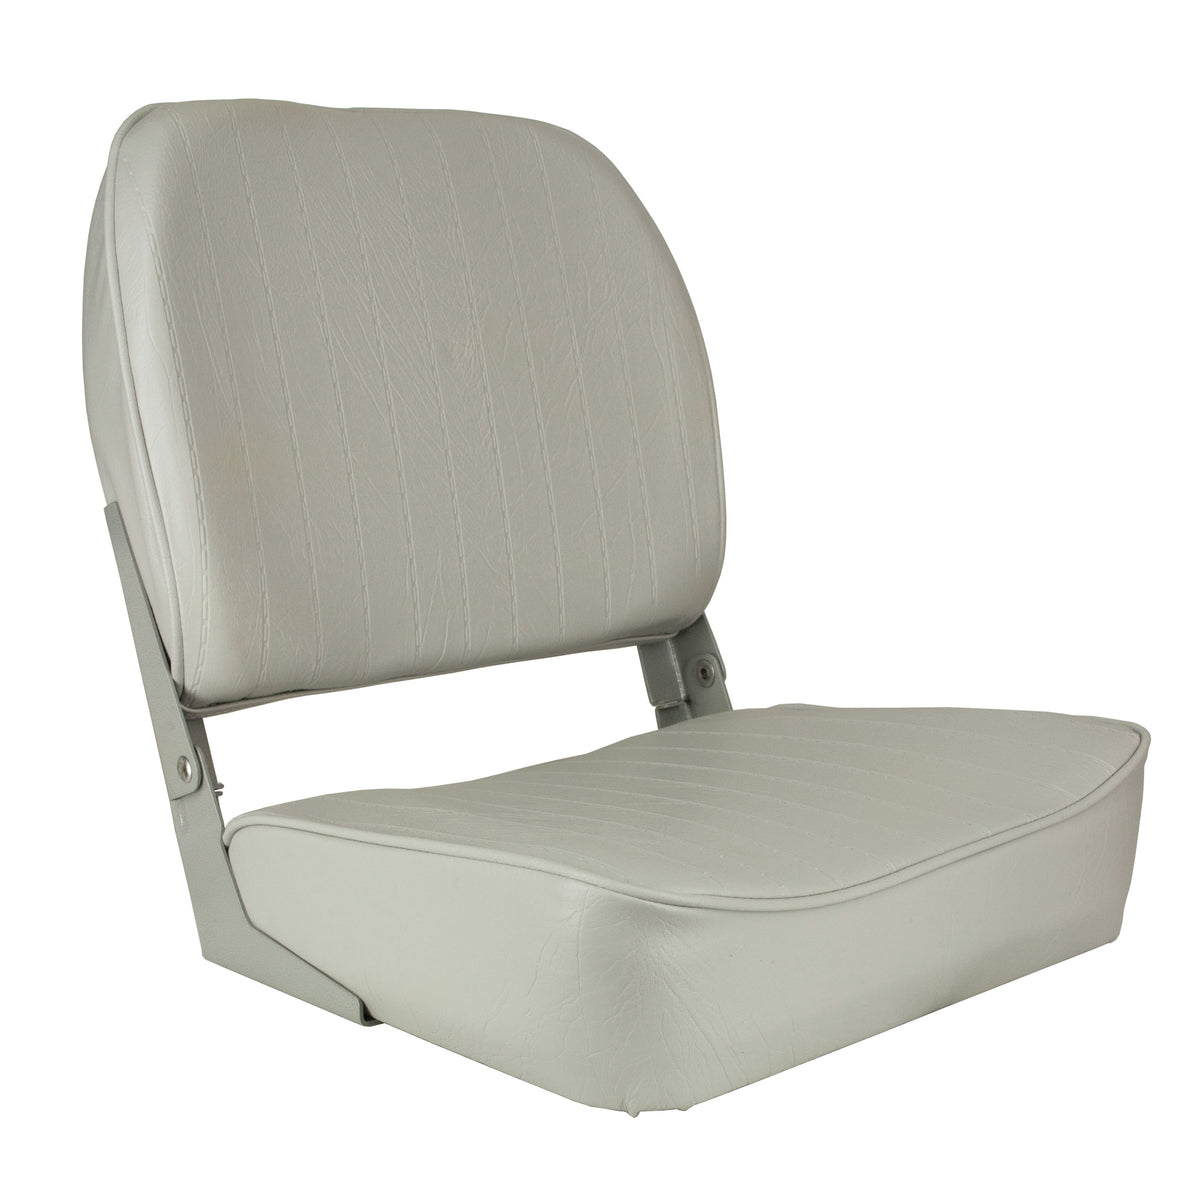 Springfield 1040623 Economy Folding Seat - Gray